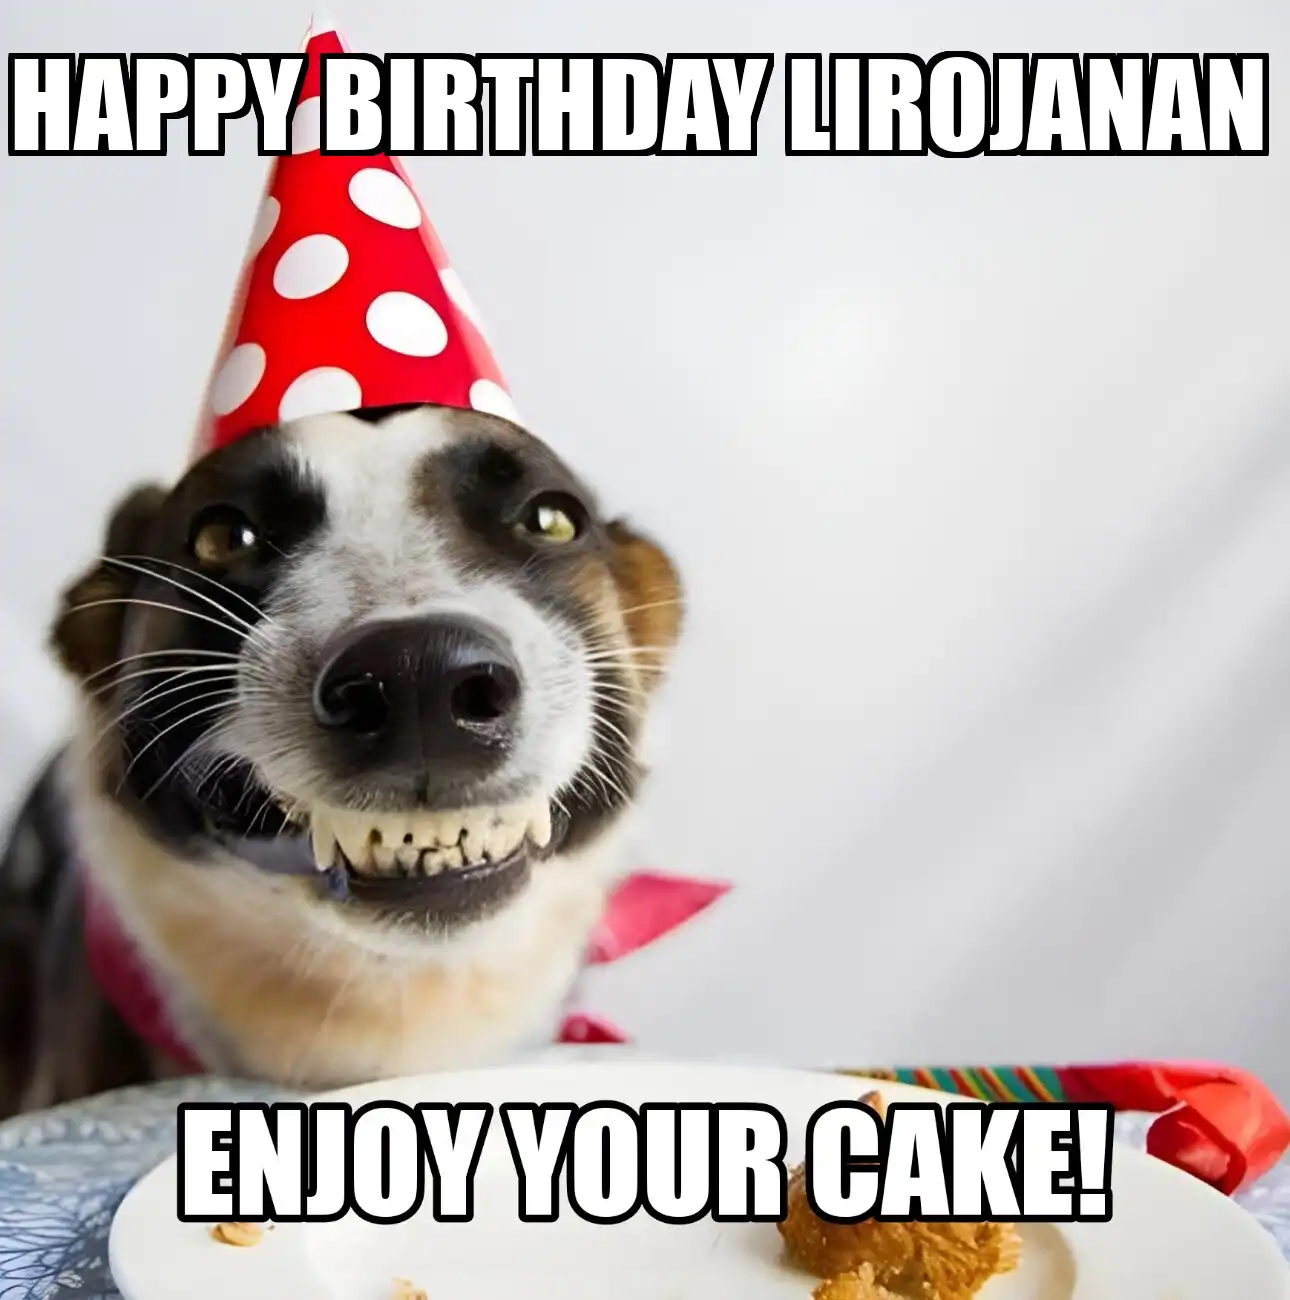 Happy Birthday Lirojanan Enjoy Your Cake Dog Meme